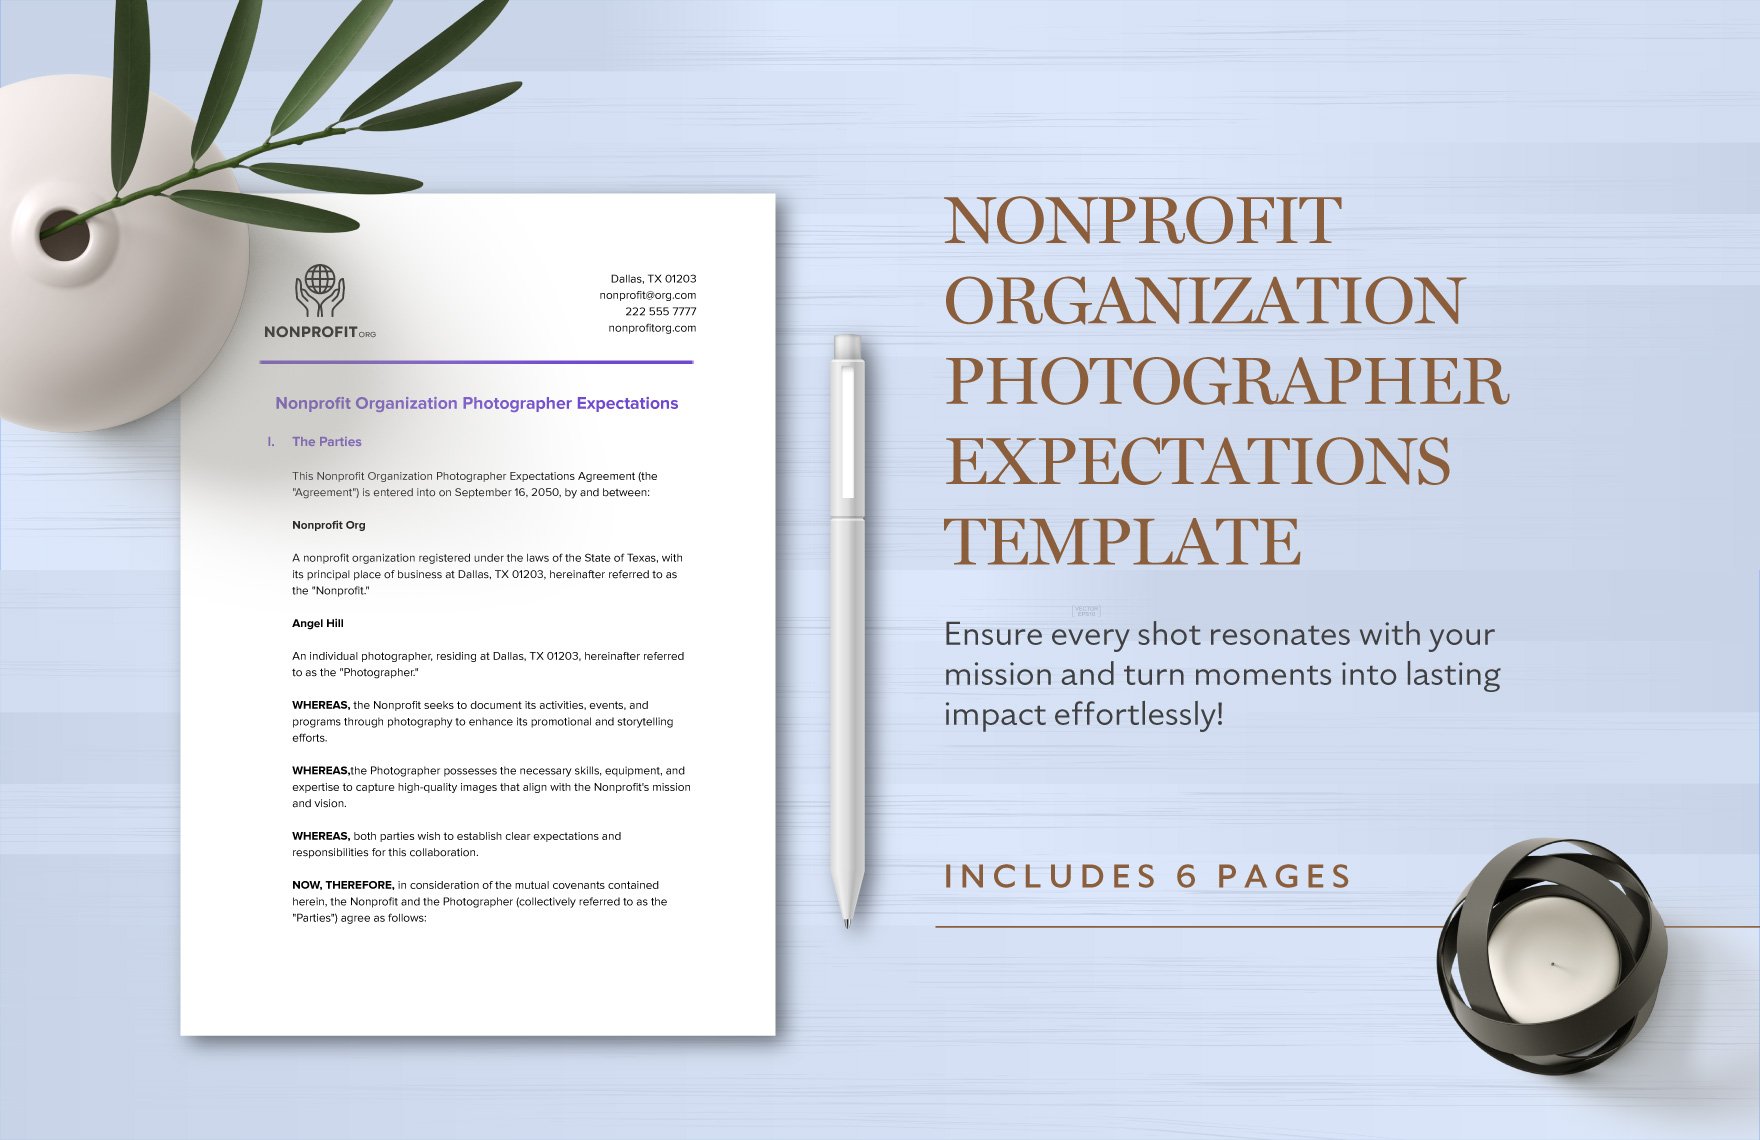 Nonprofit Organization Photographer Expectations Template